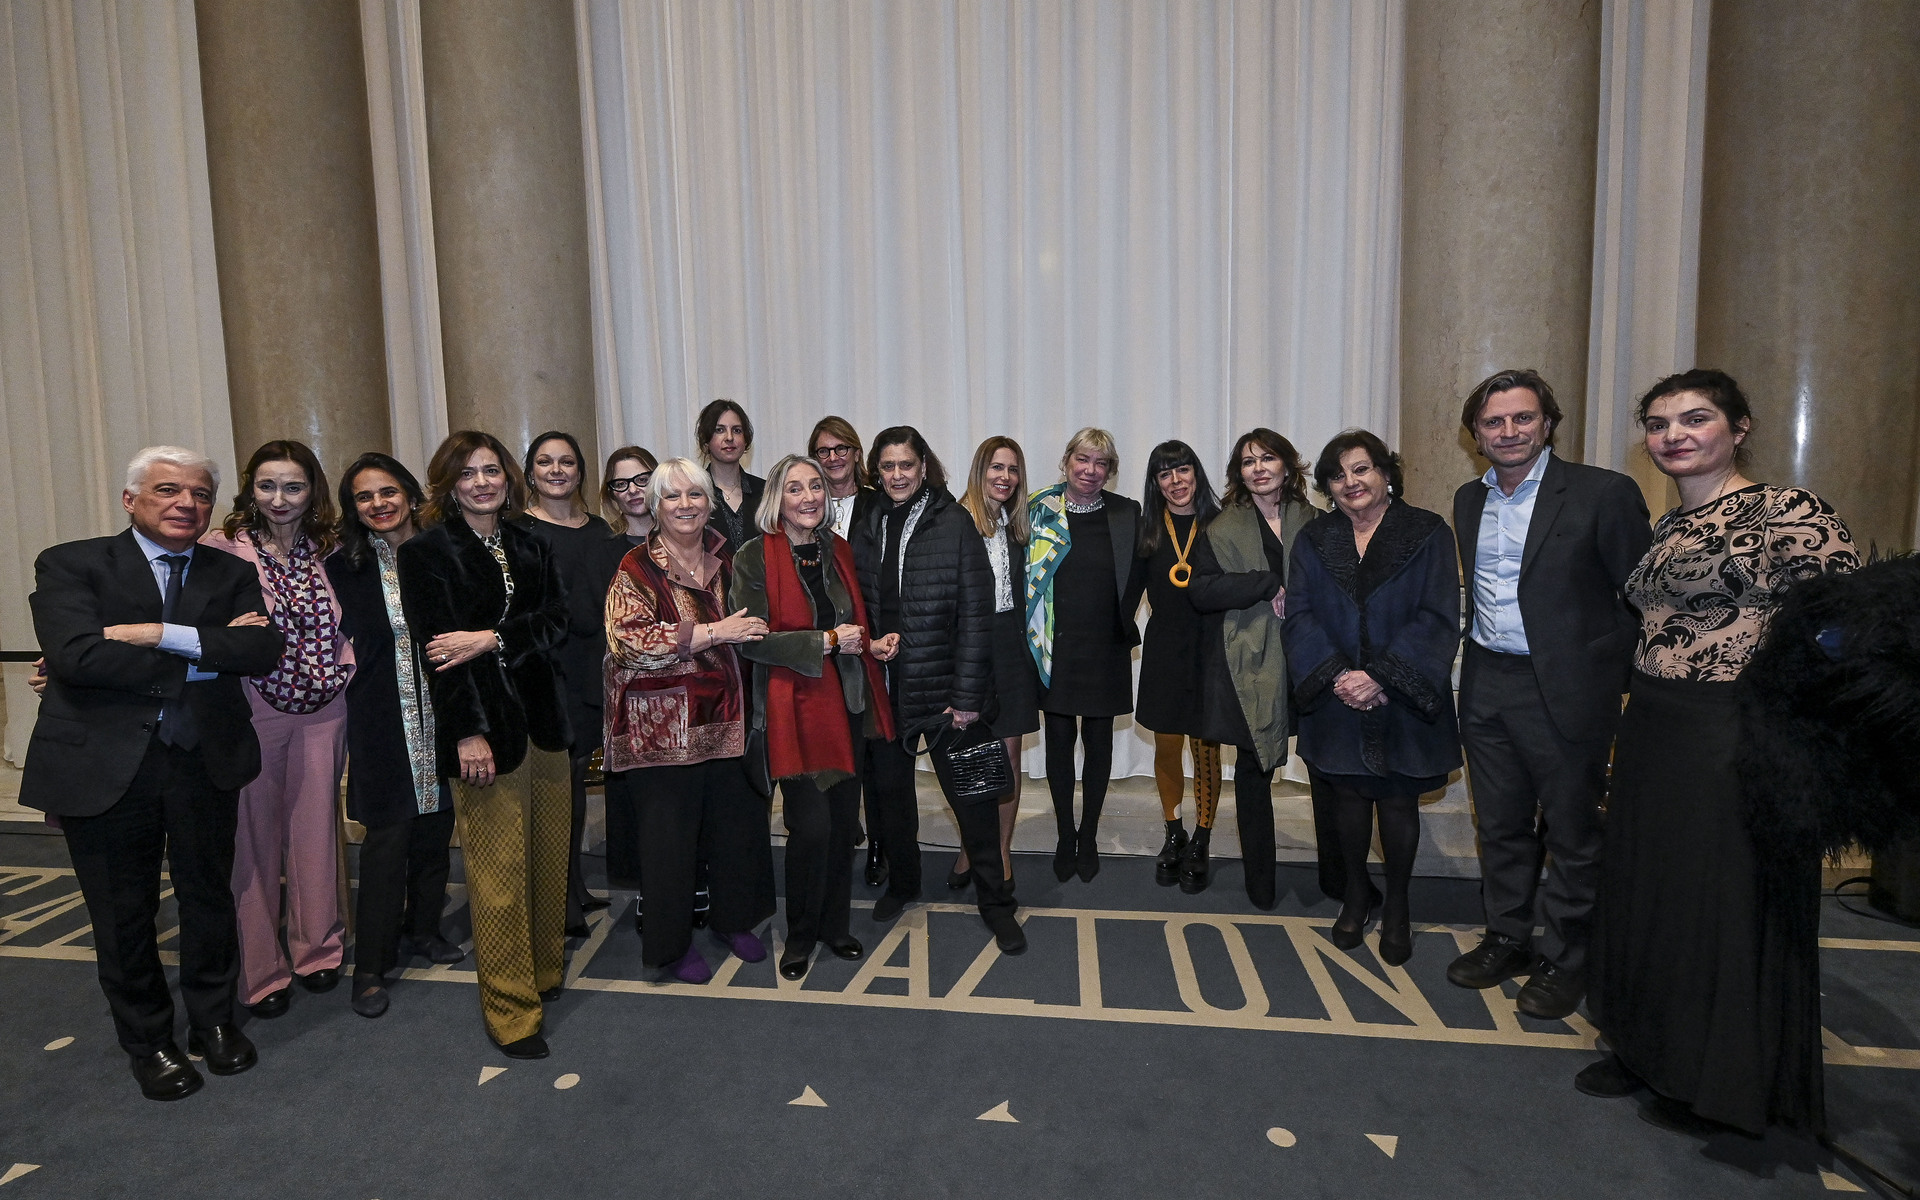 Carlotta de Bevilacqua awarded with Art Award: Female Noun